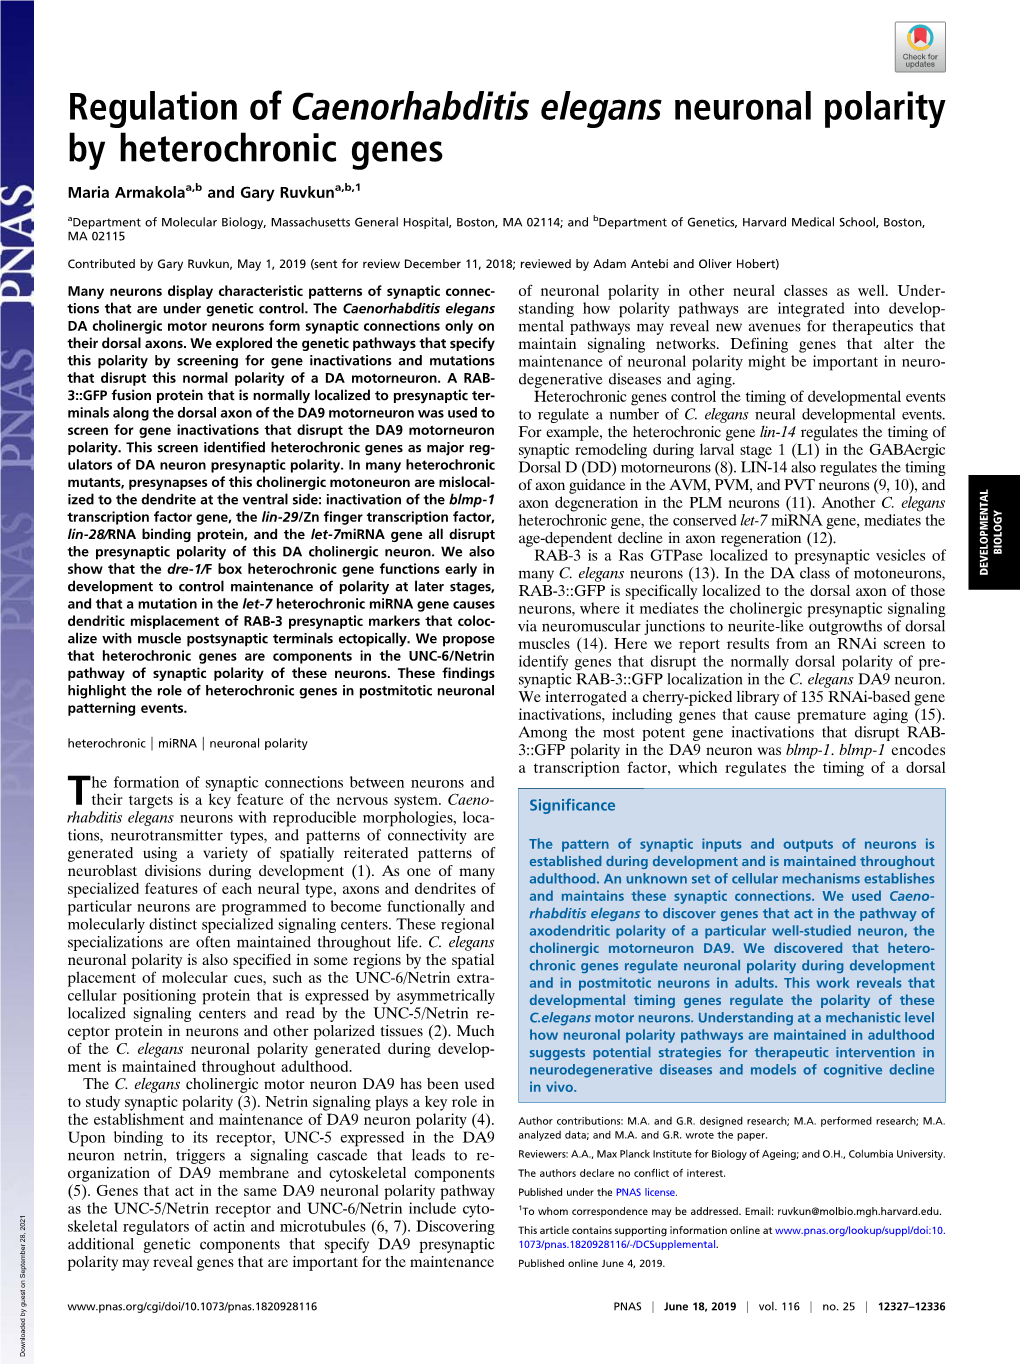 Regulation of Caenorhabditis Elegans Neuronal Polarity by Heterochronic Genes